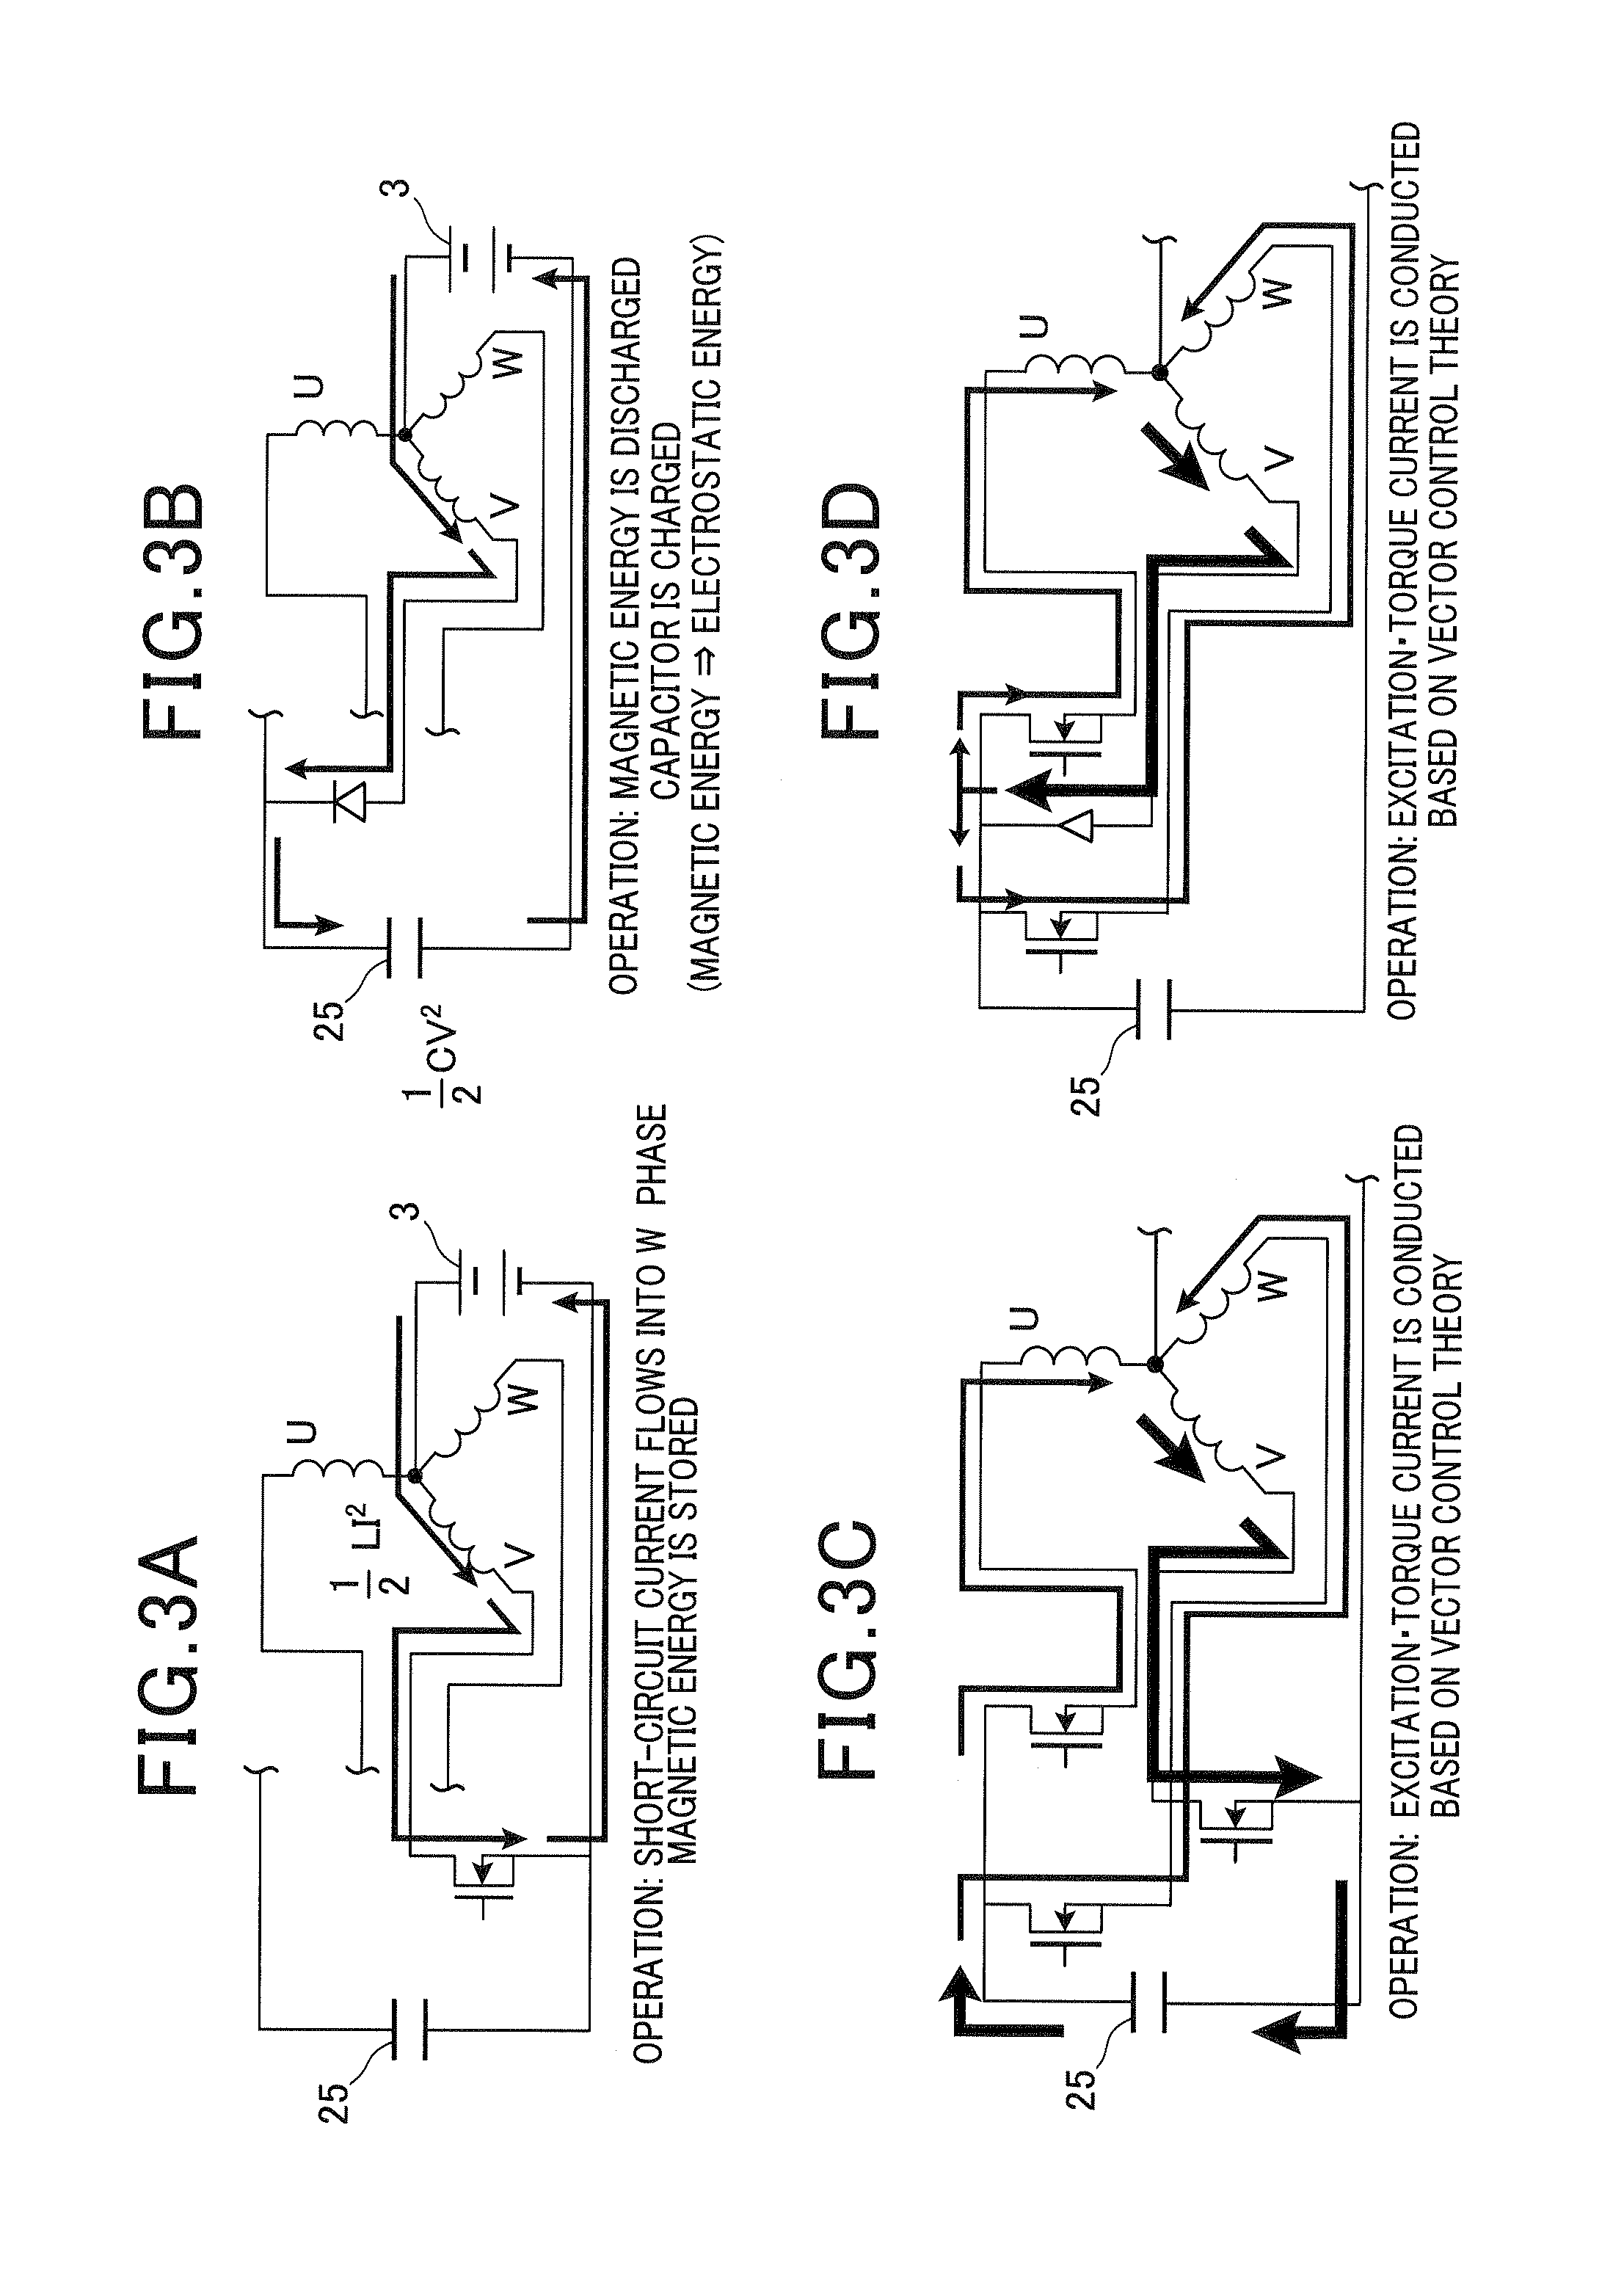 Control apparatus for motor-generator